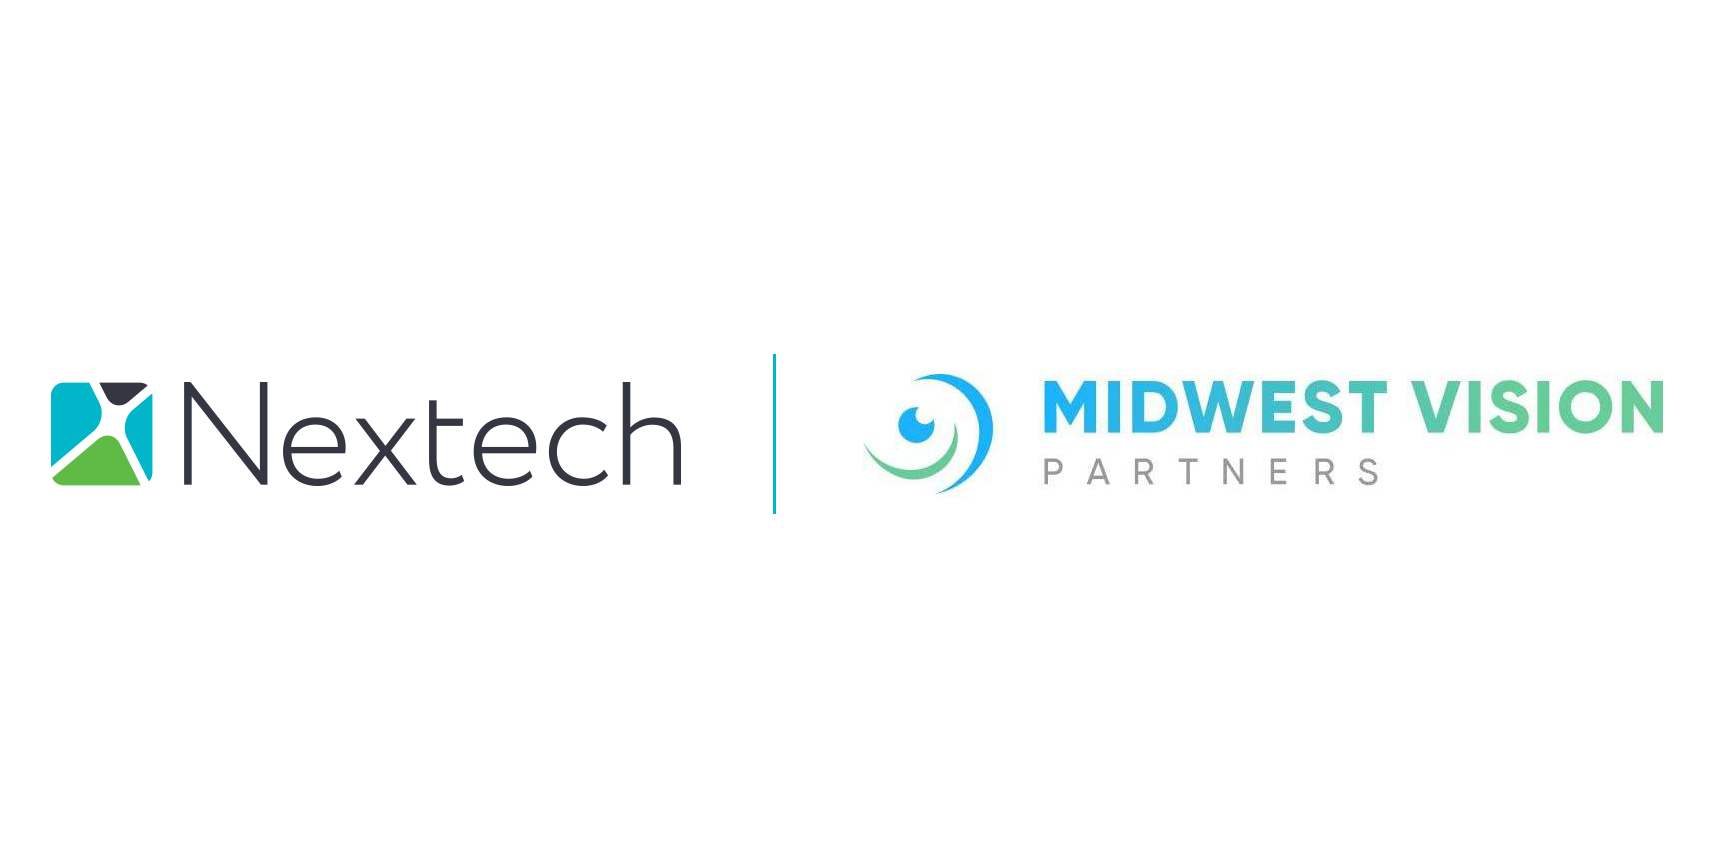 Midwest Vision Partners Selects Nextech’s IntelleChartPRO